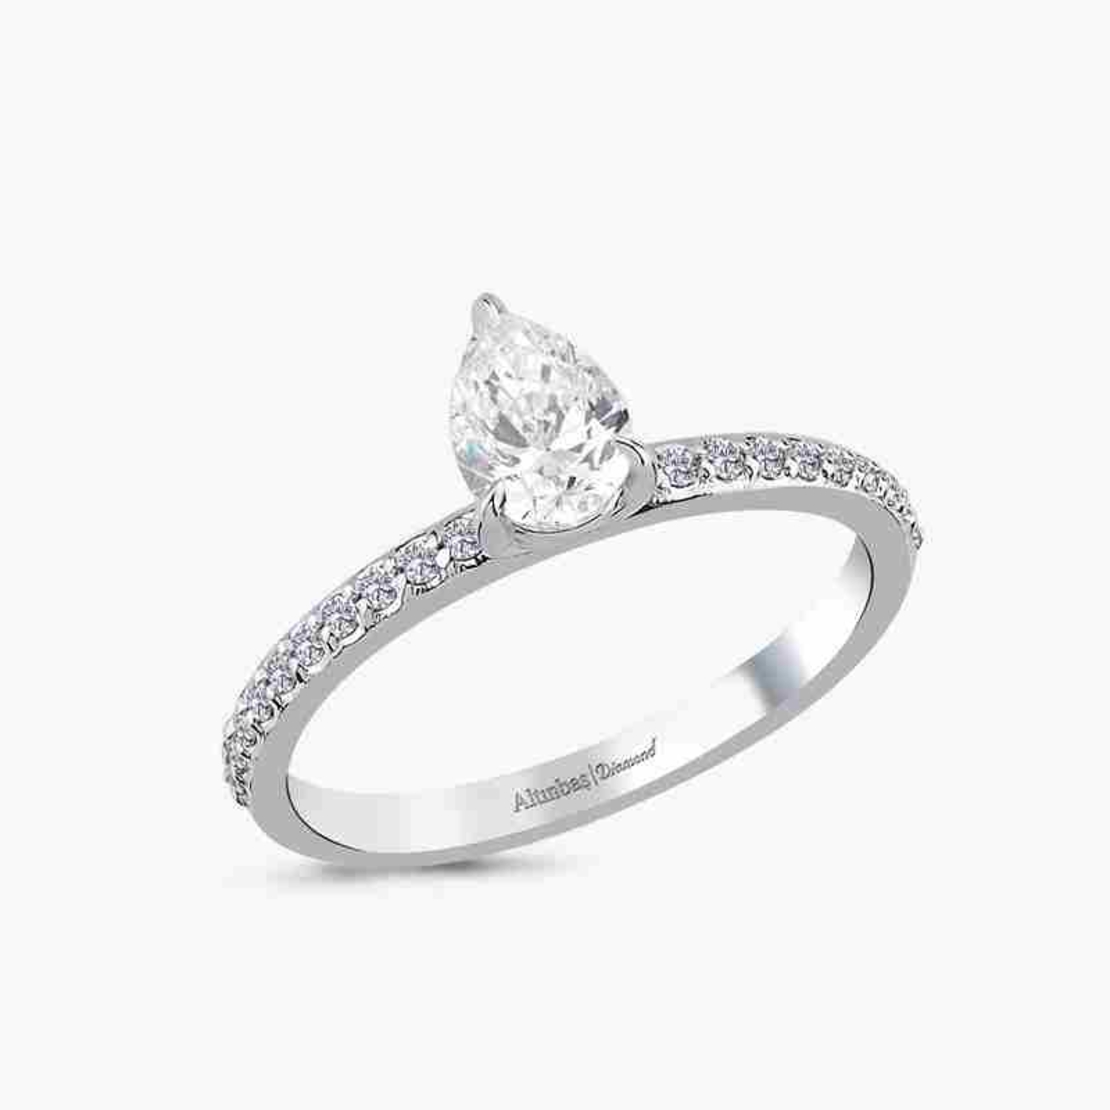 0.86 ct Pear shaped diamond ring